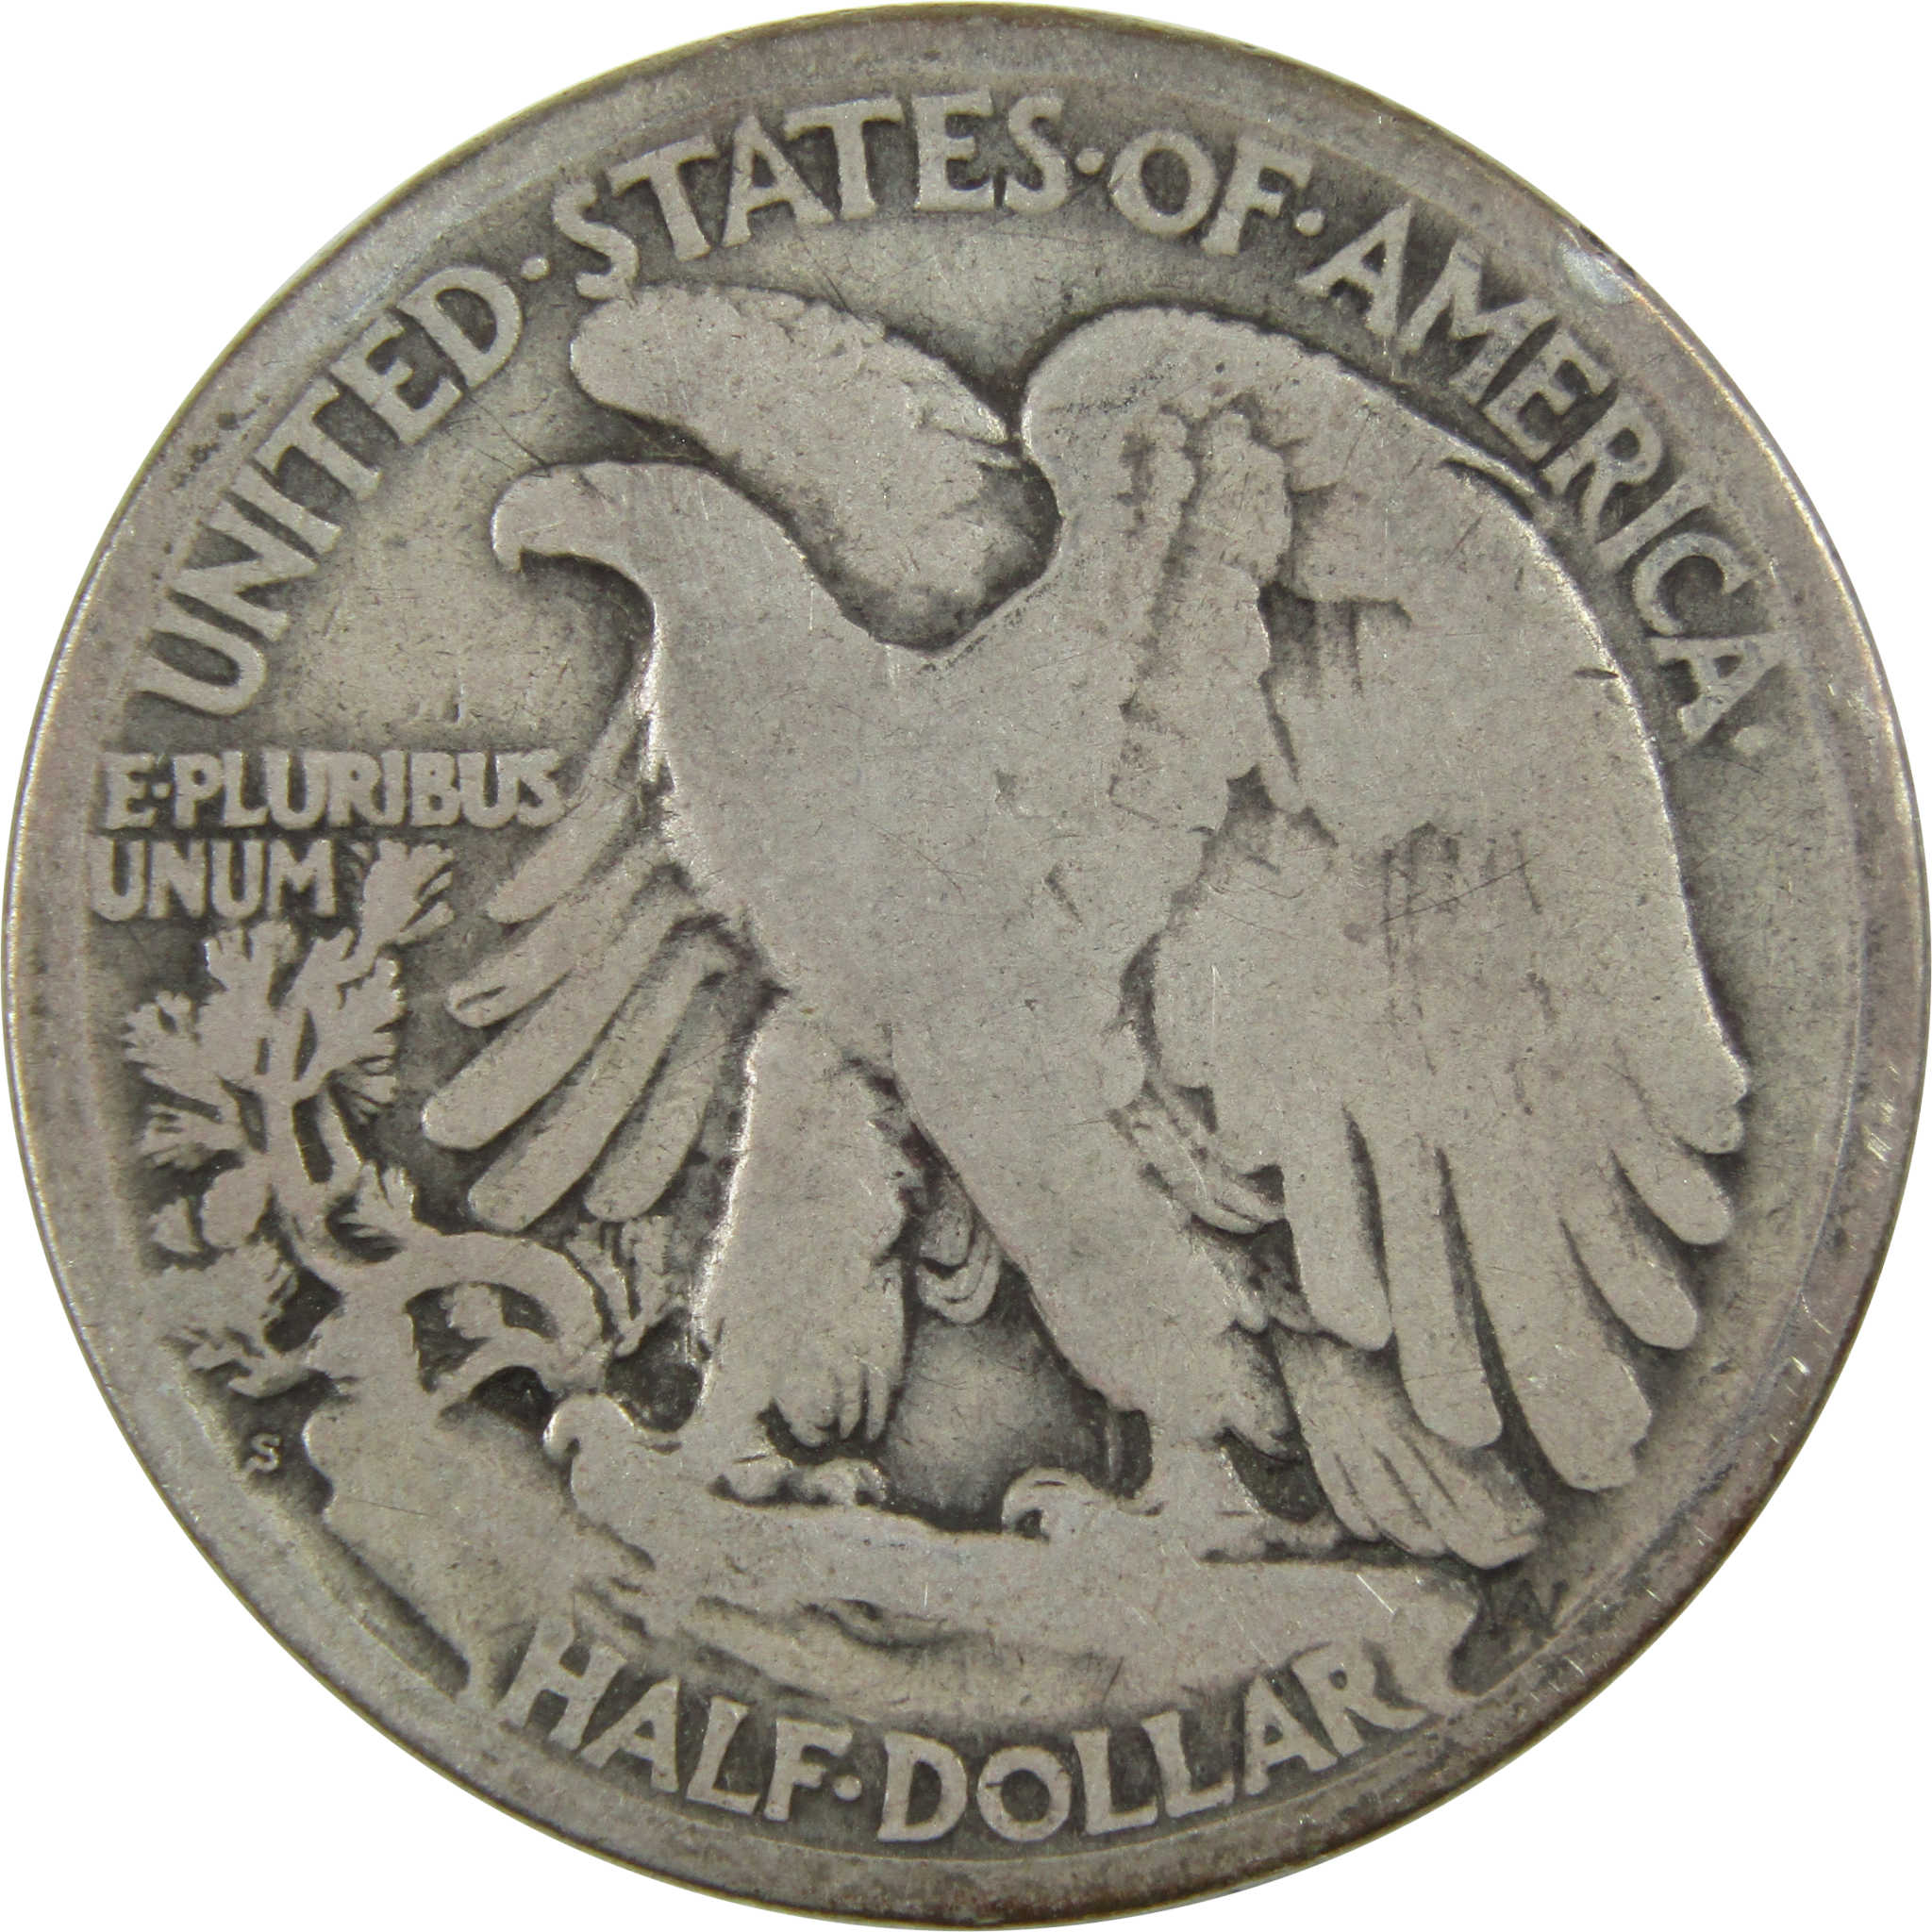 1918 S Liberty Walking Half Dollar G Good Silver 50c Coin SKU:I13057